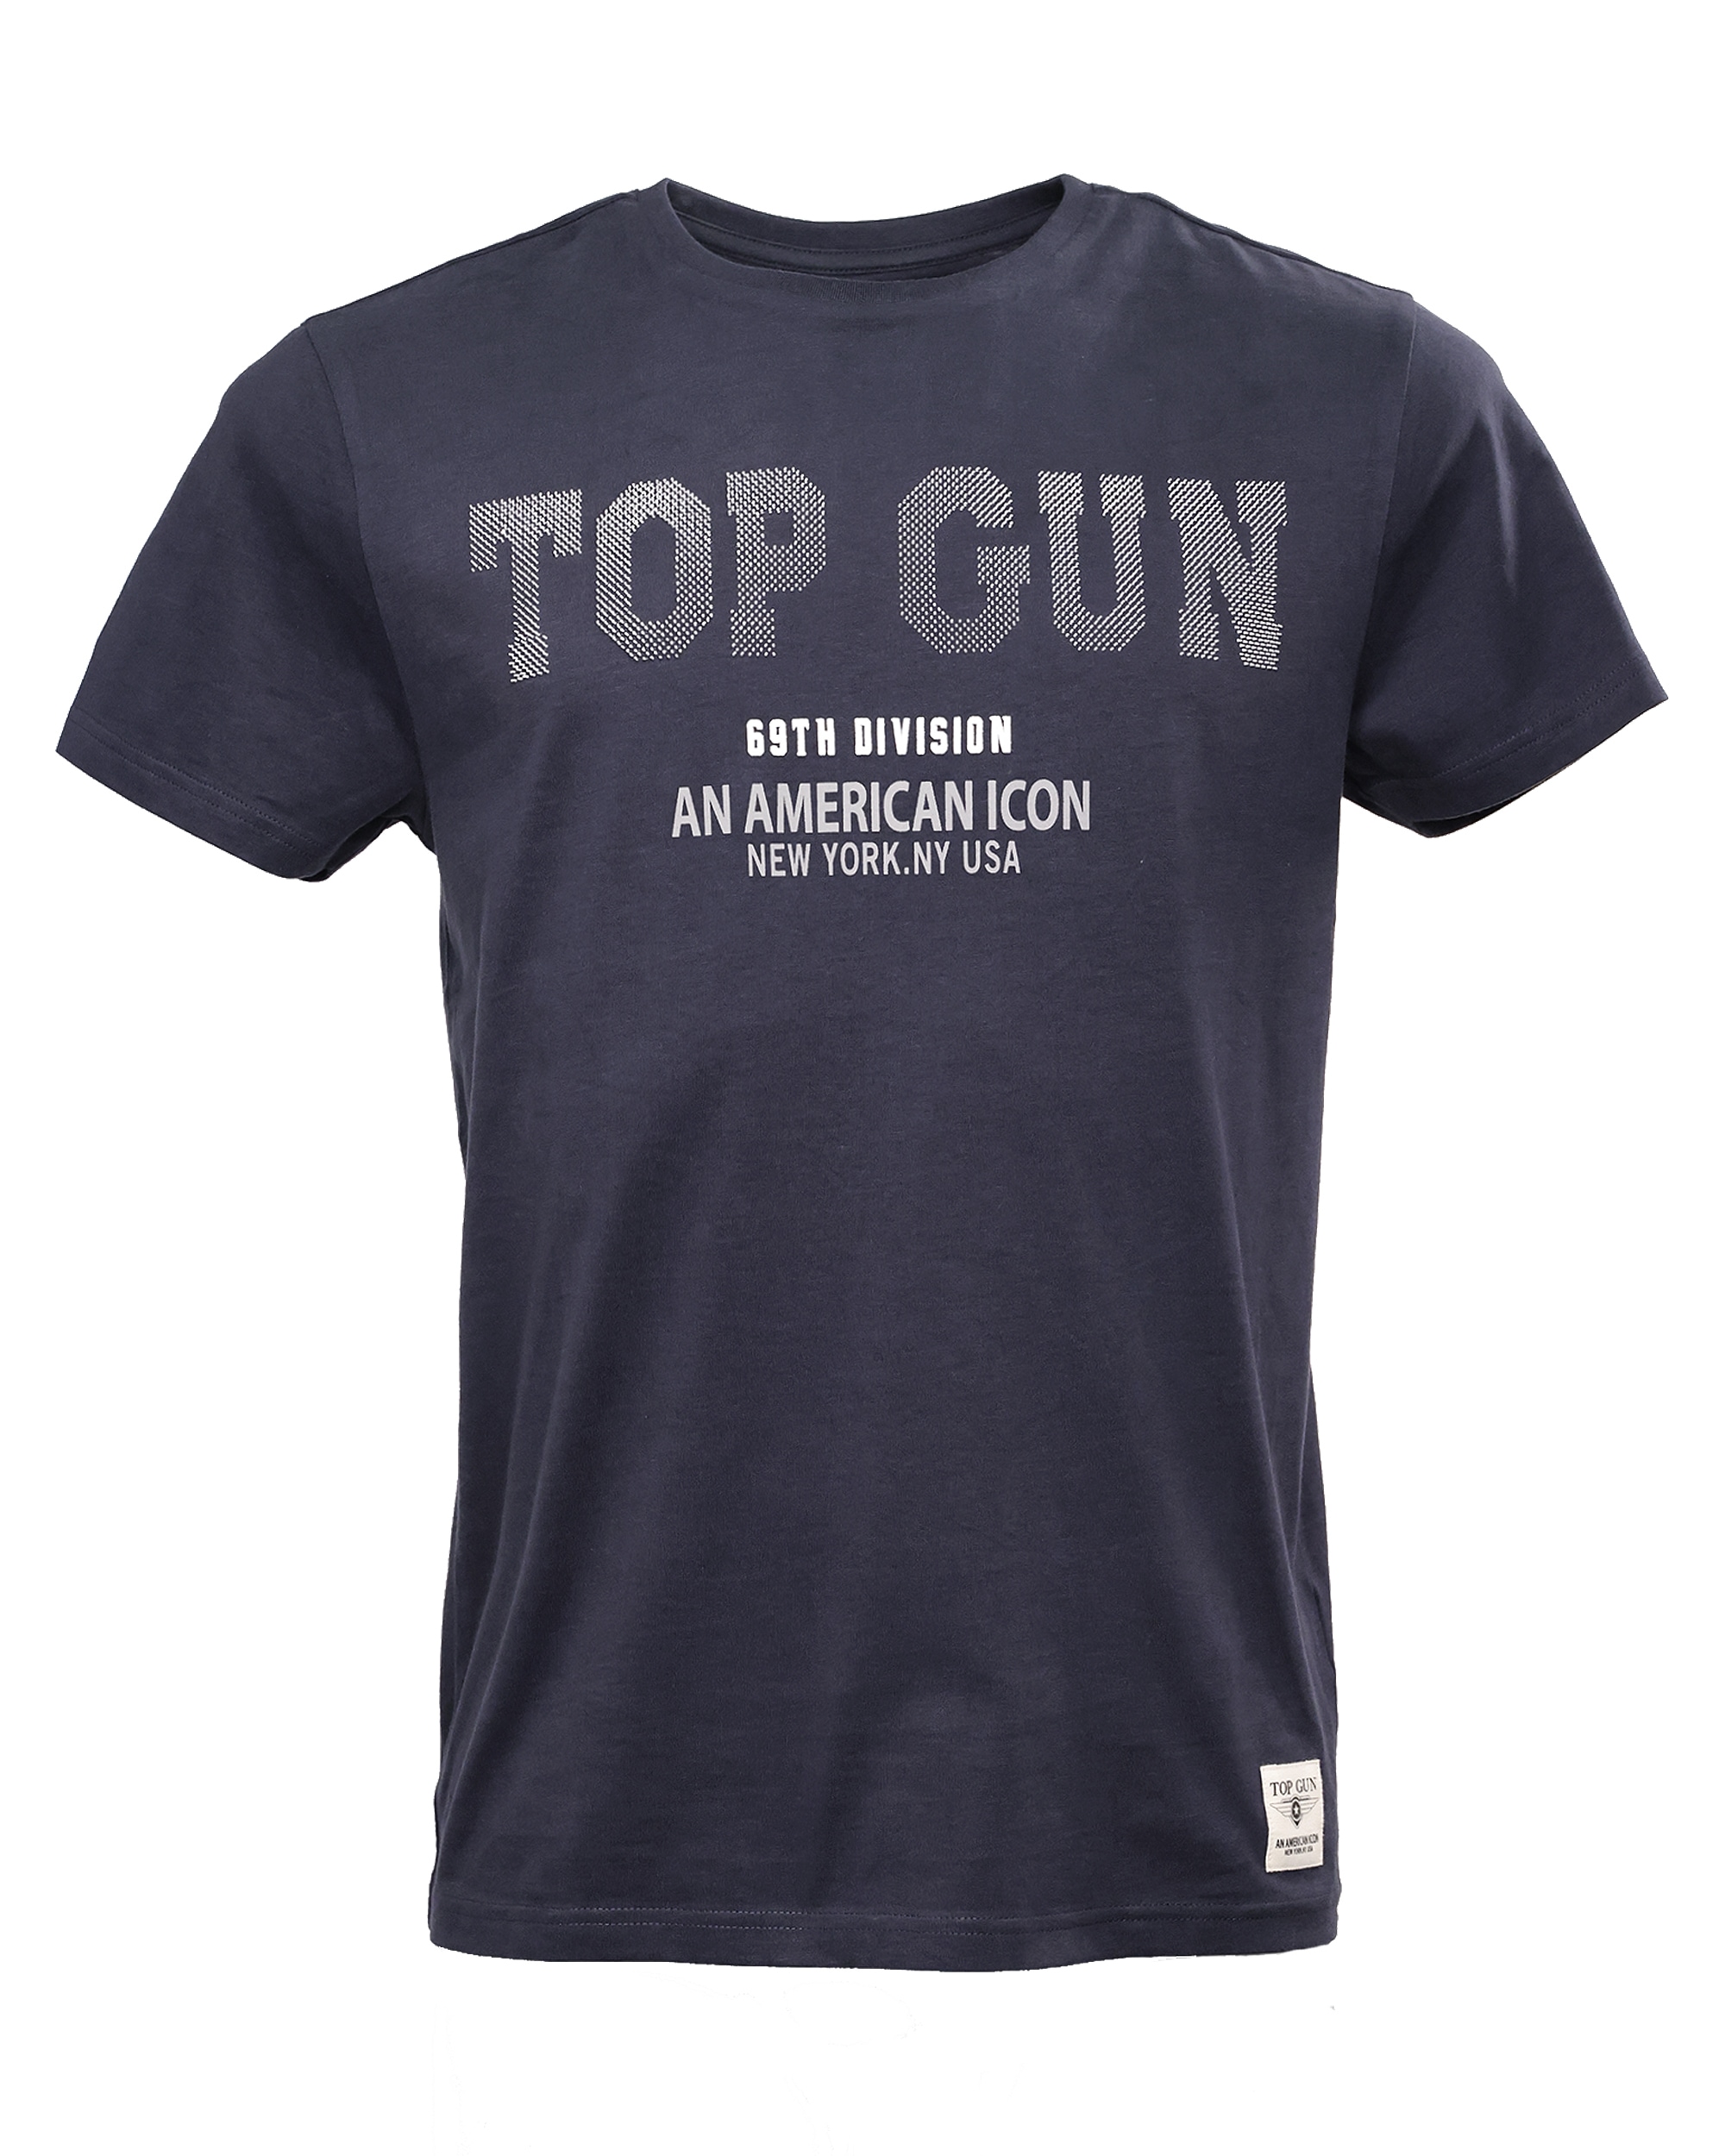 TOP GUN T-Shirt »TG20213006« ▷ kaufen | BAUR